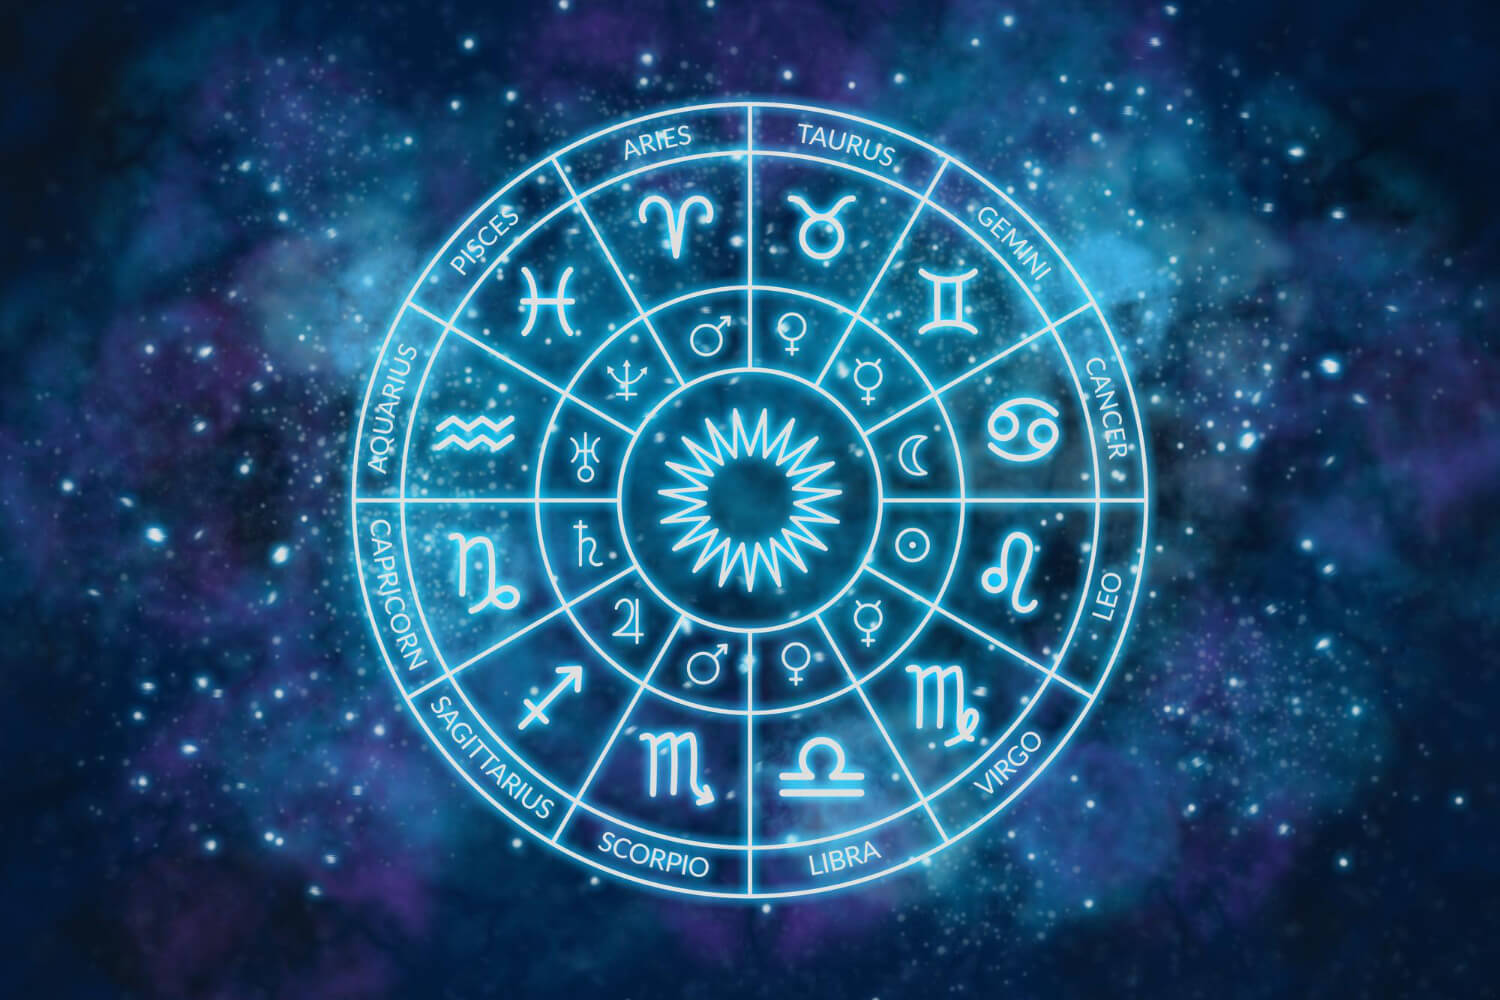 Twelve astrological signs